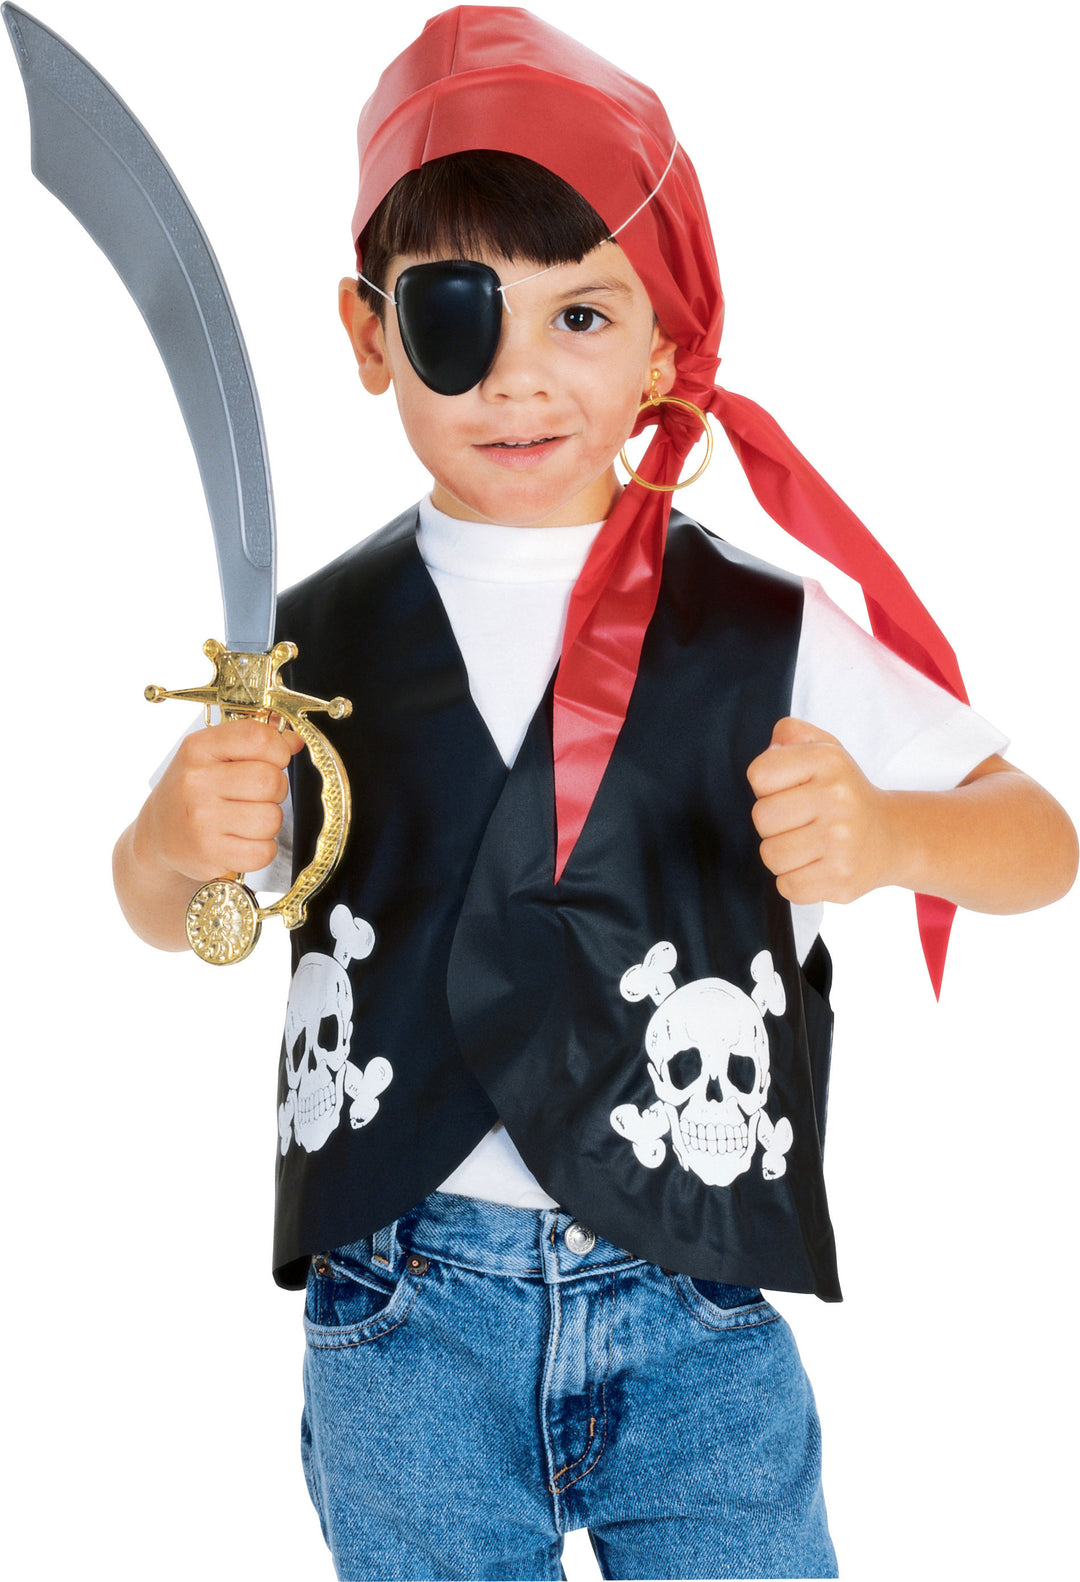 Childs Costume Set - Pirate